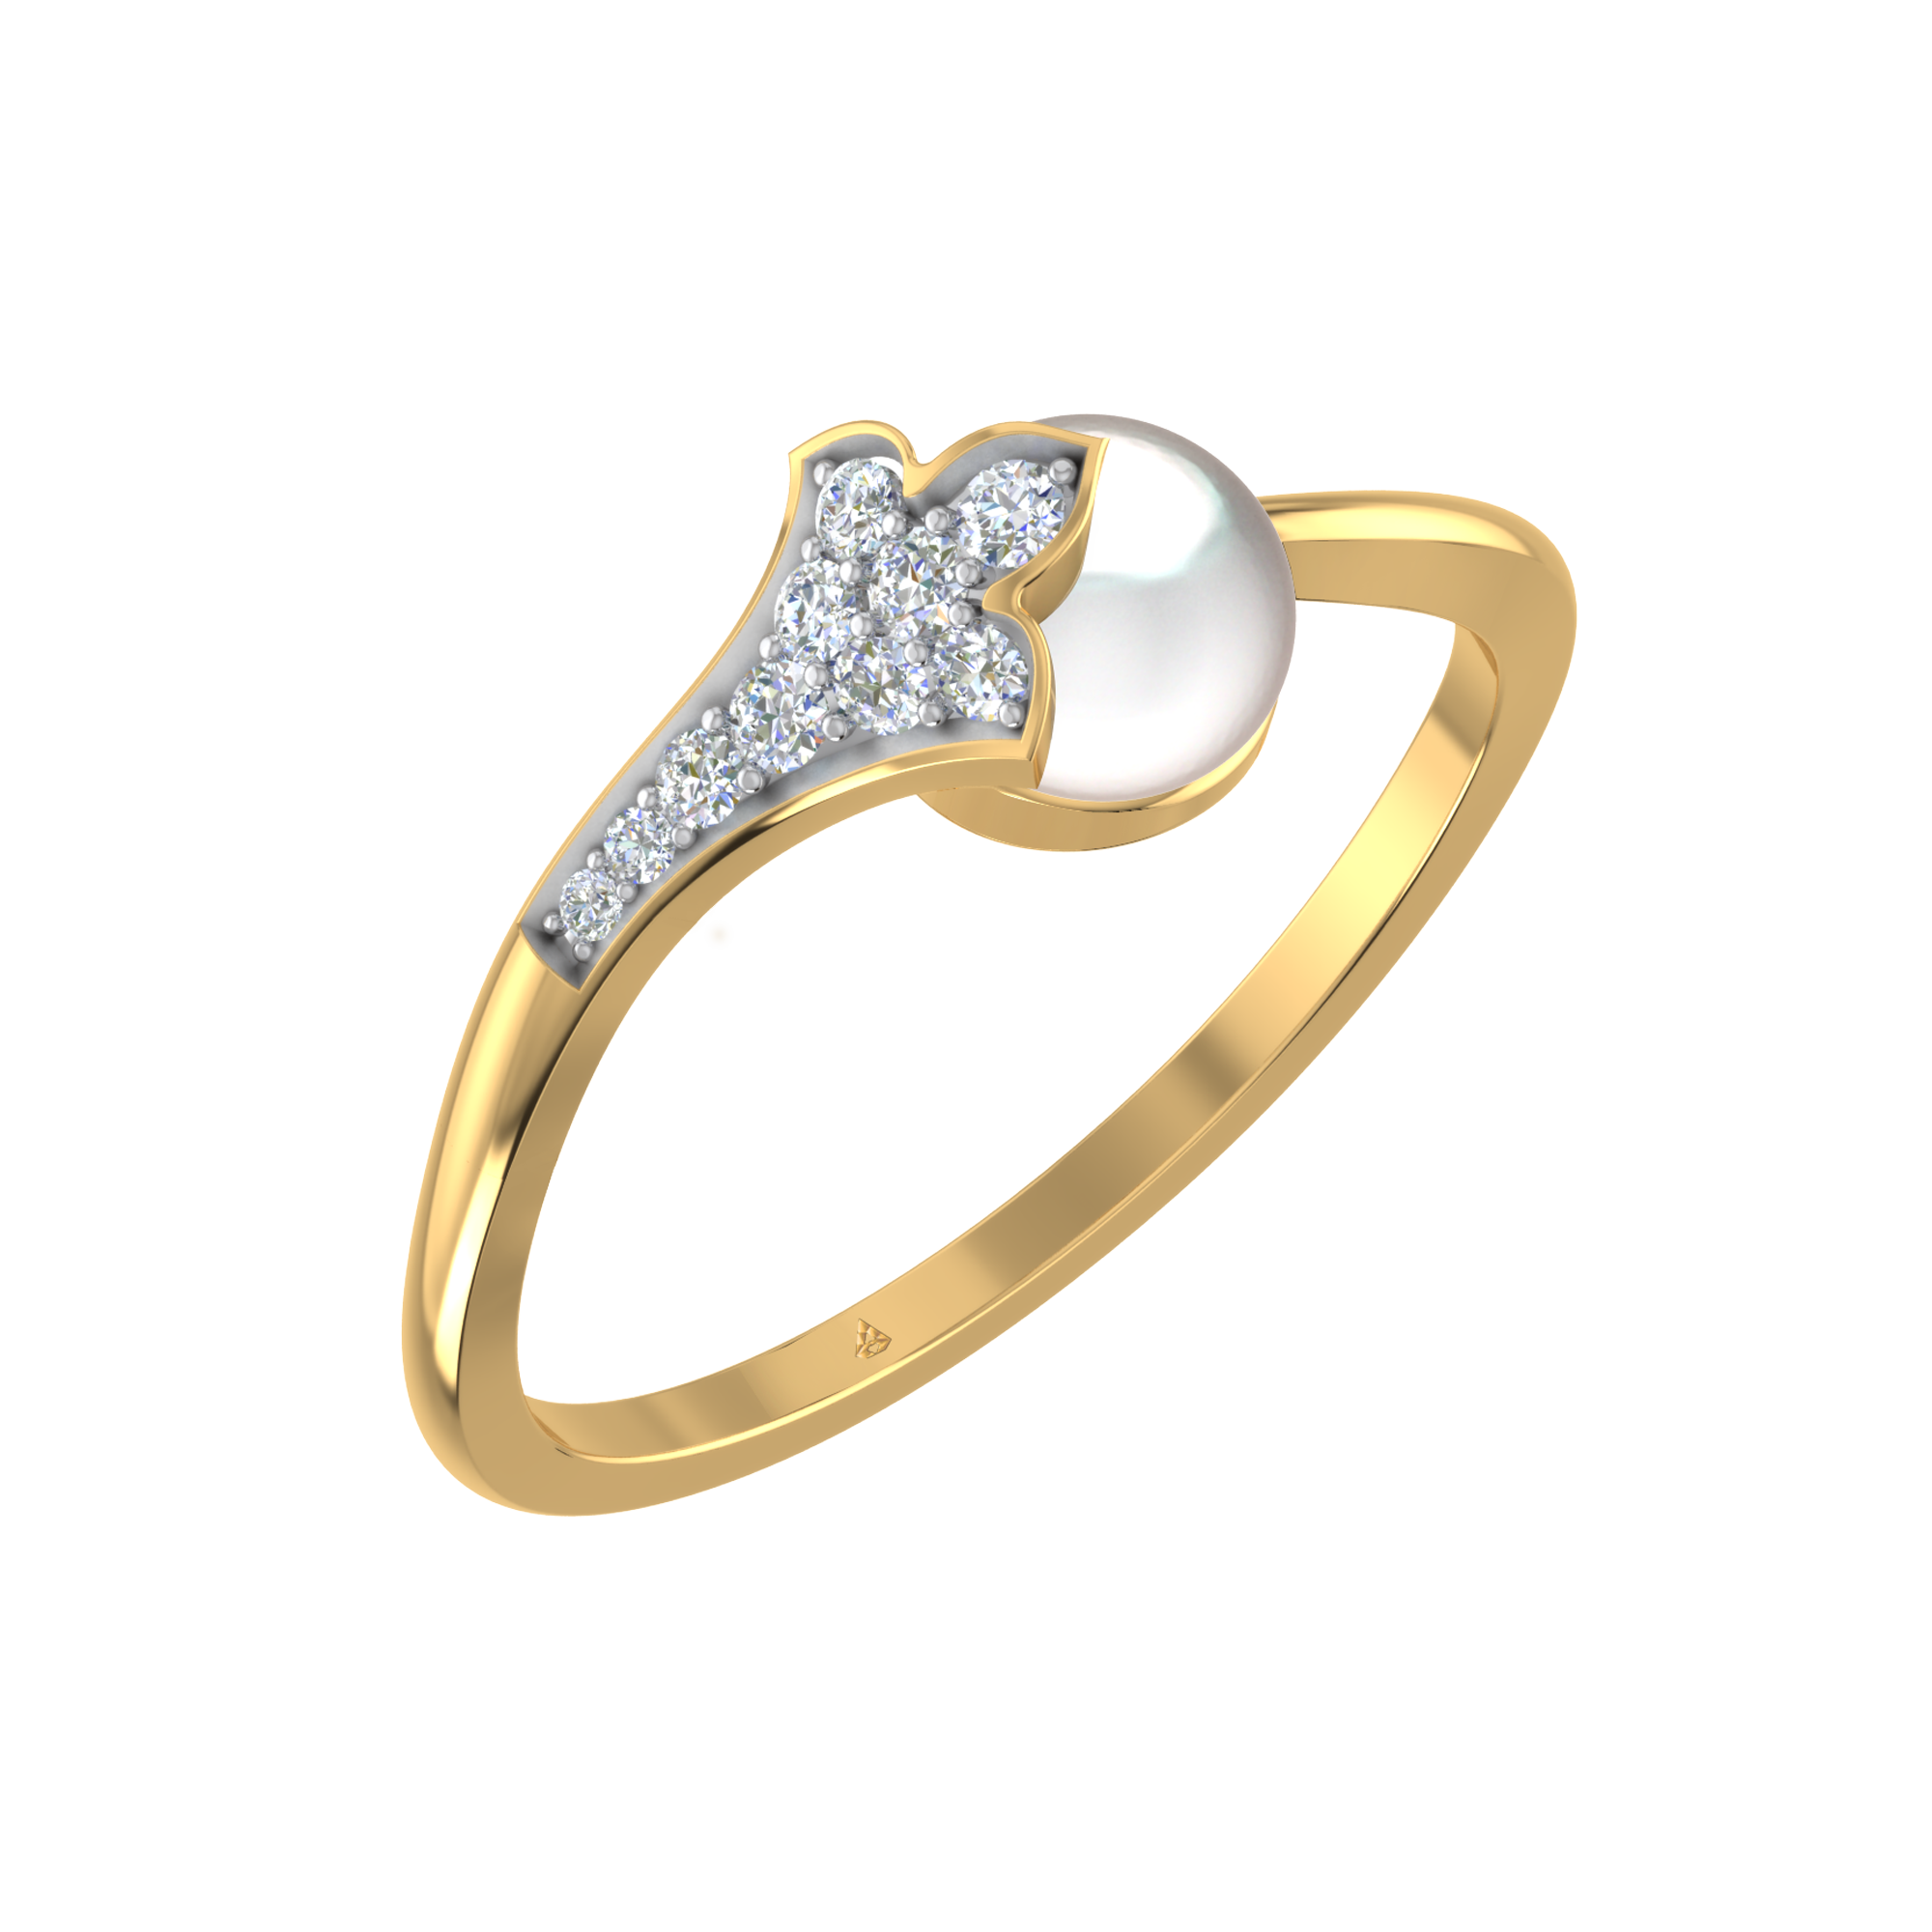 Blooming Pearls | Premium pearl ring collections – GautamBanerjee